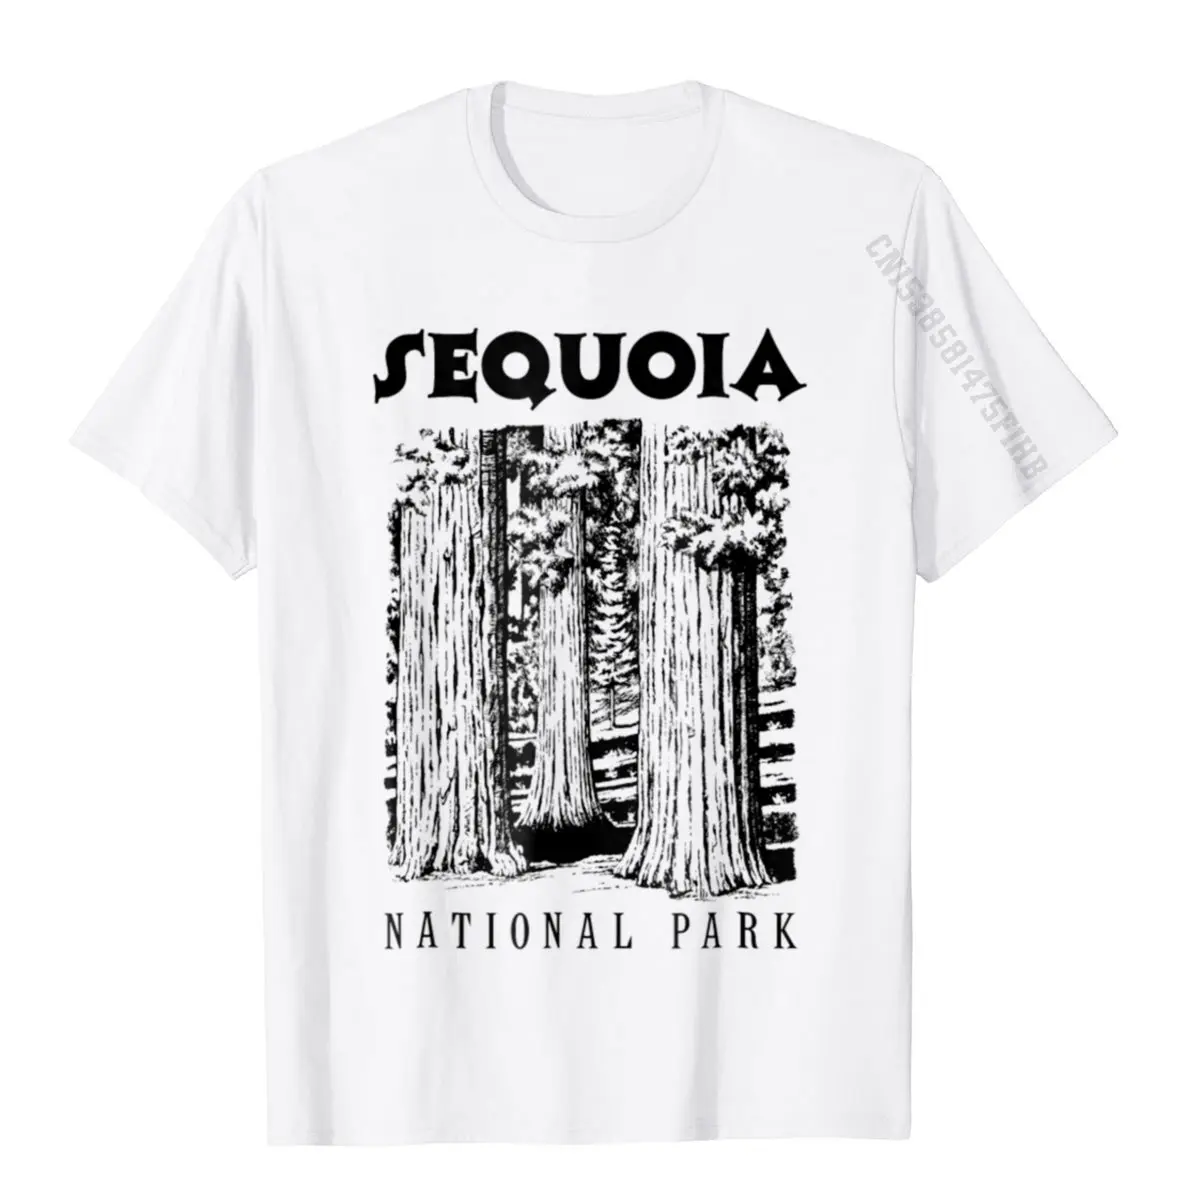 Sequoia National Park Tshirt I Love Hiking Wanderlust Tee Cosie Tops Shirts Cotton Mens Tshirts Cosie Rife